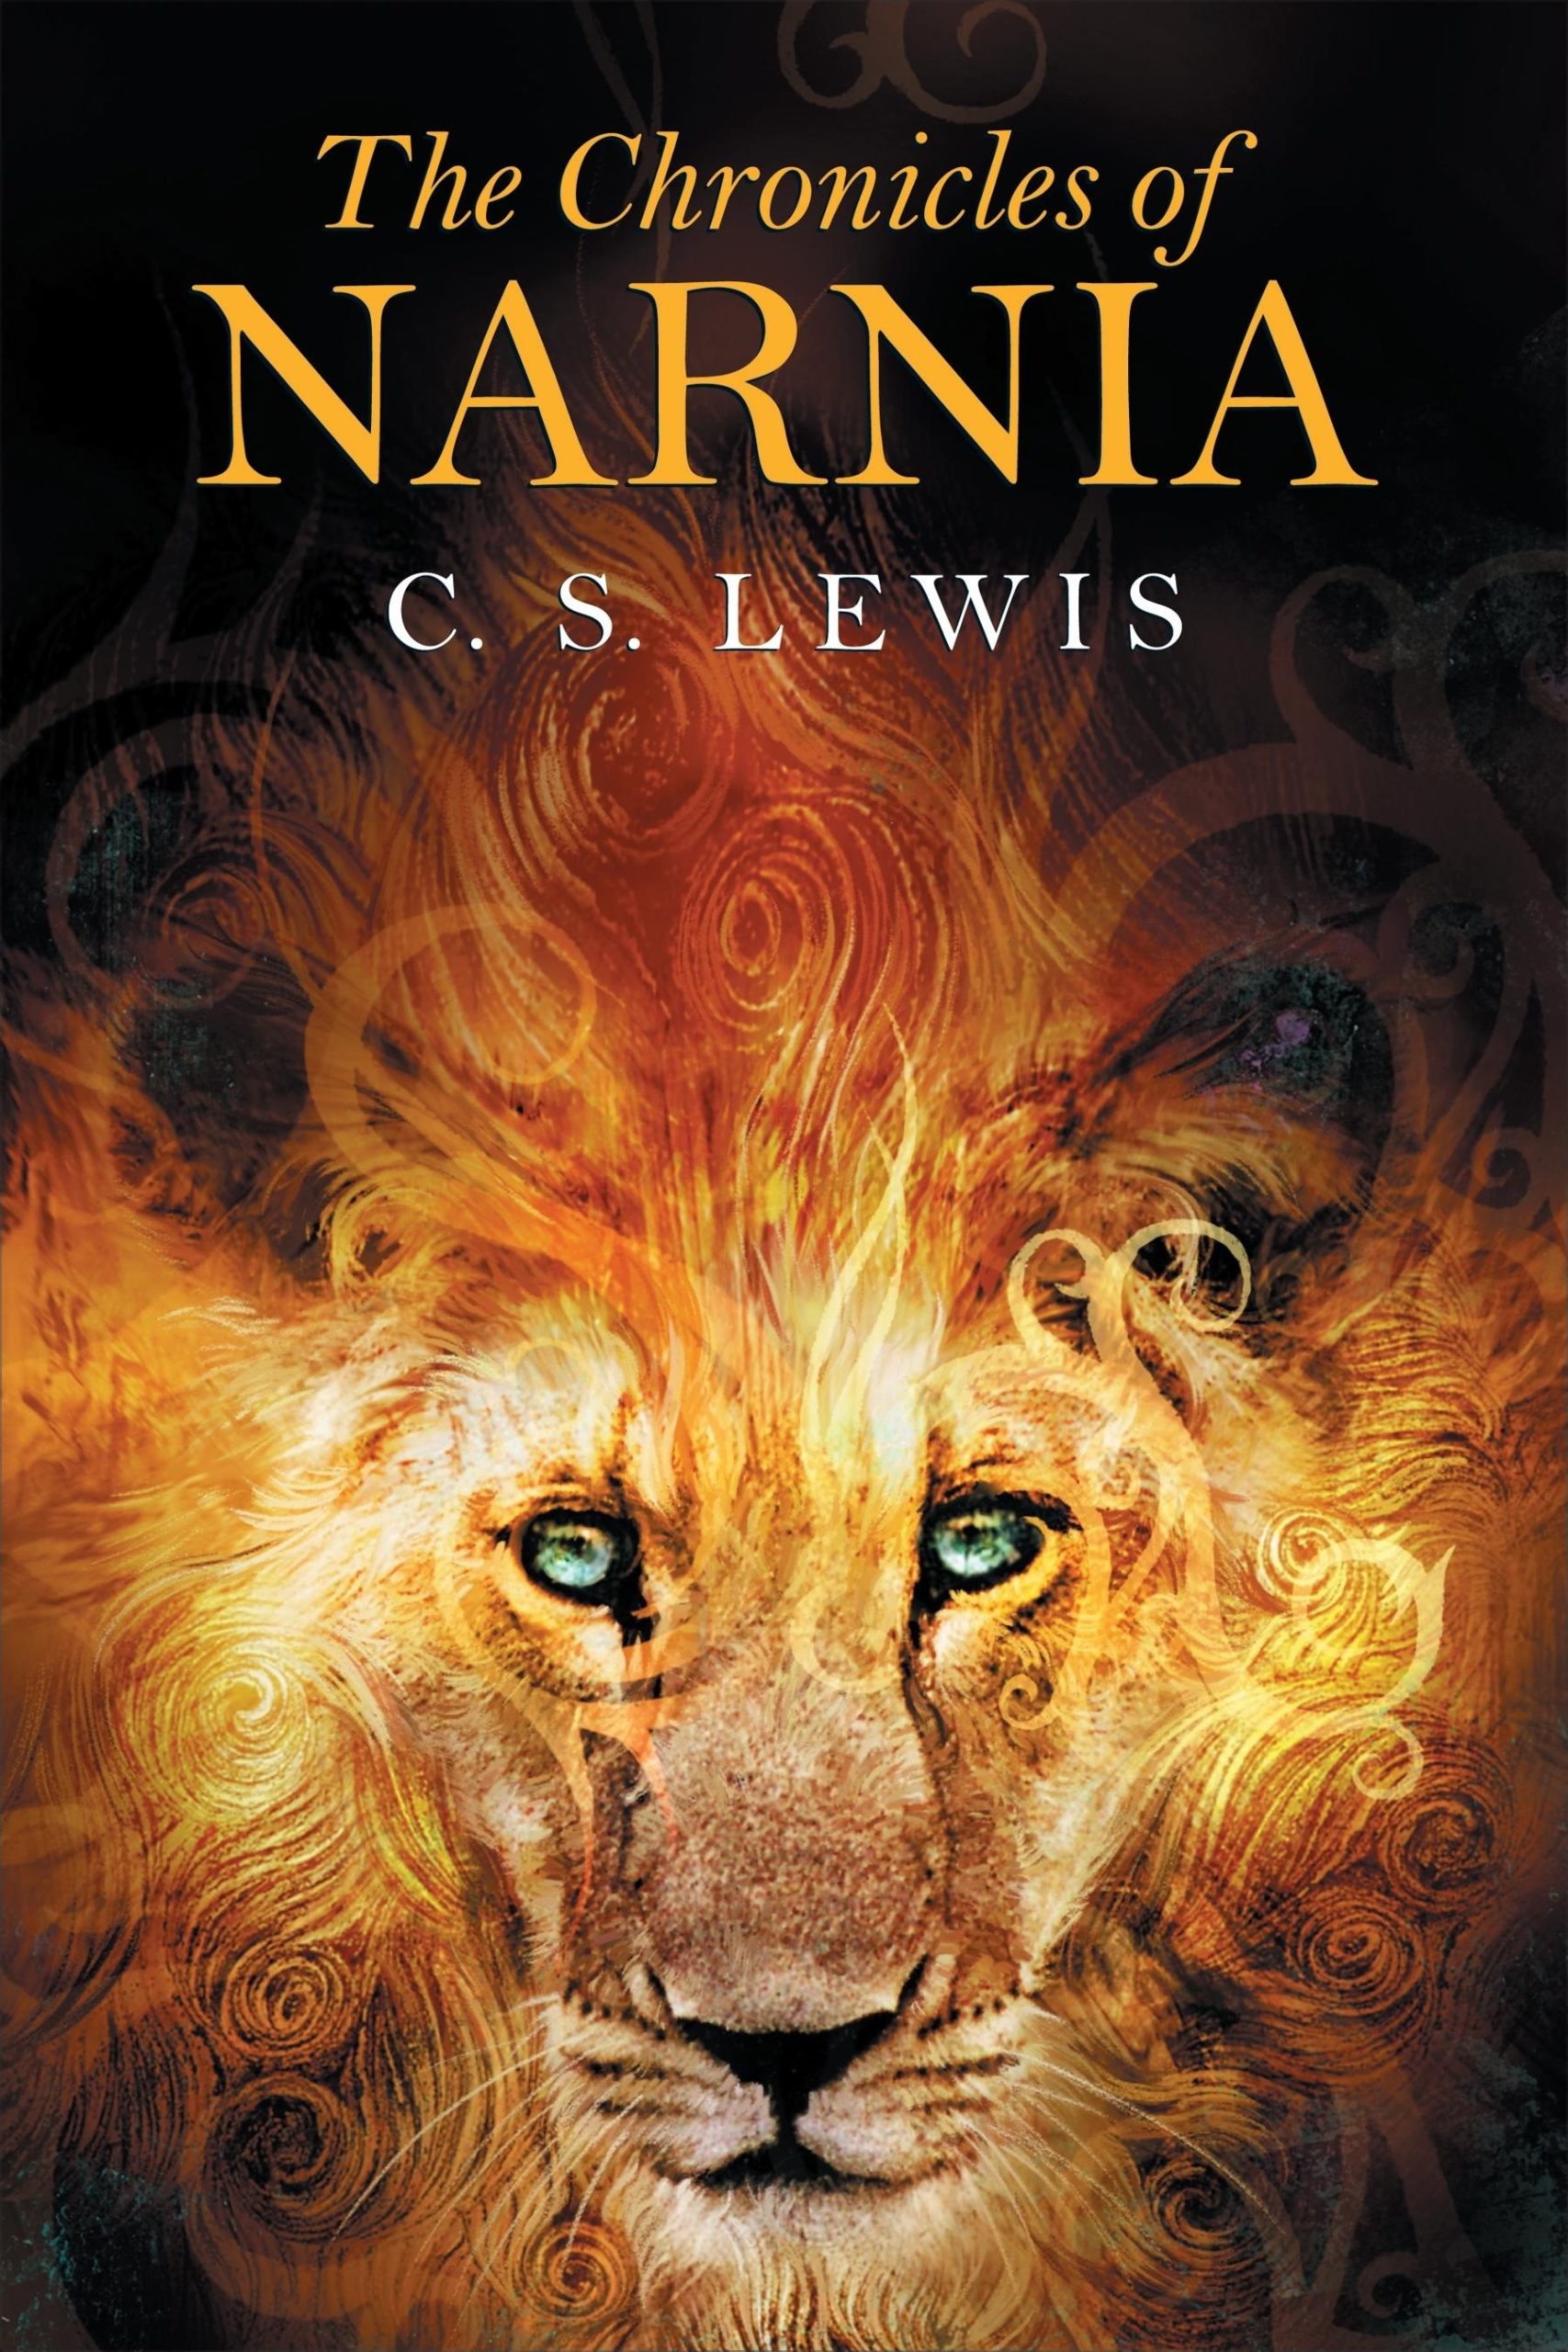 Aslan and the Gospel  A Muddled Salvation – Ex-Narnian